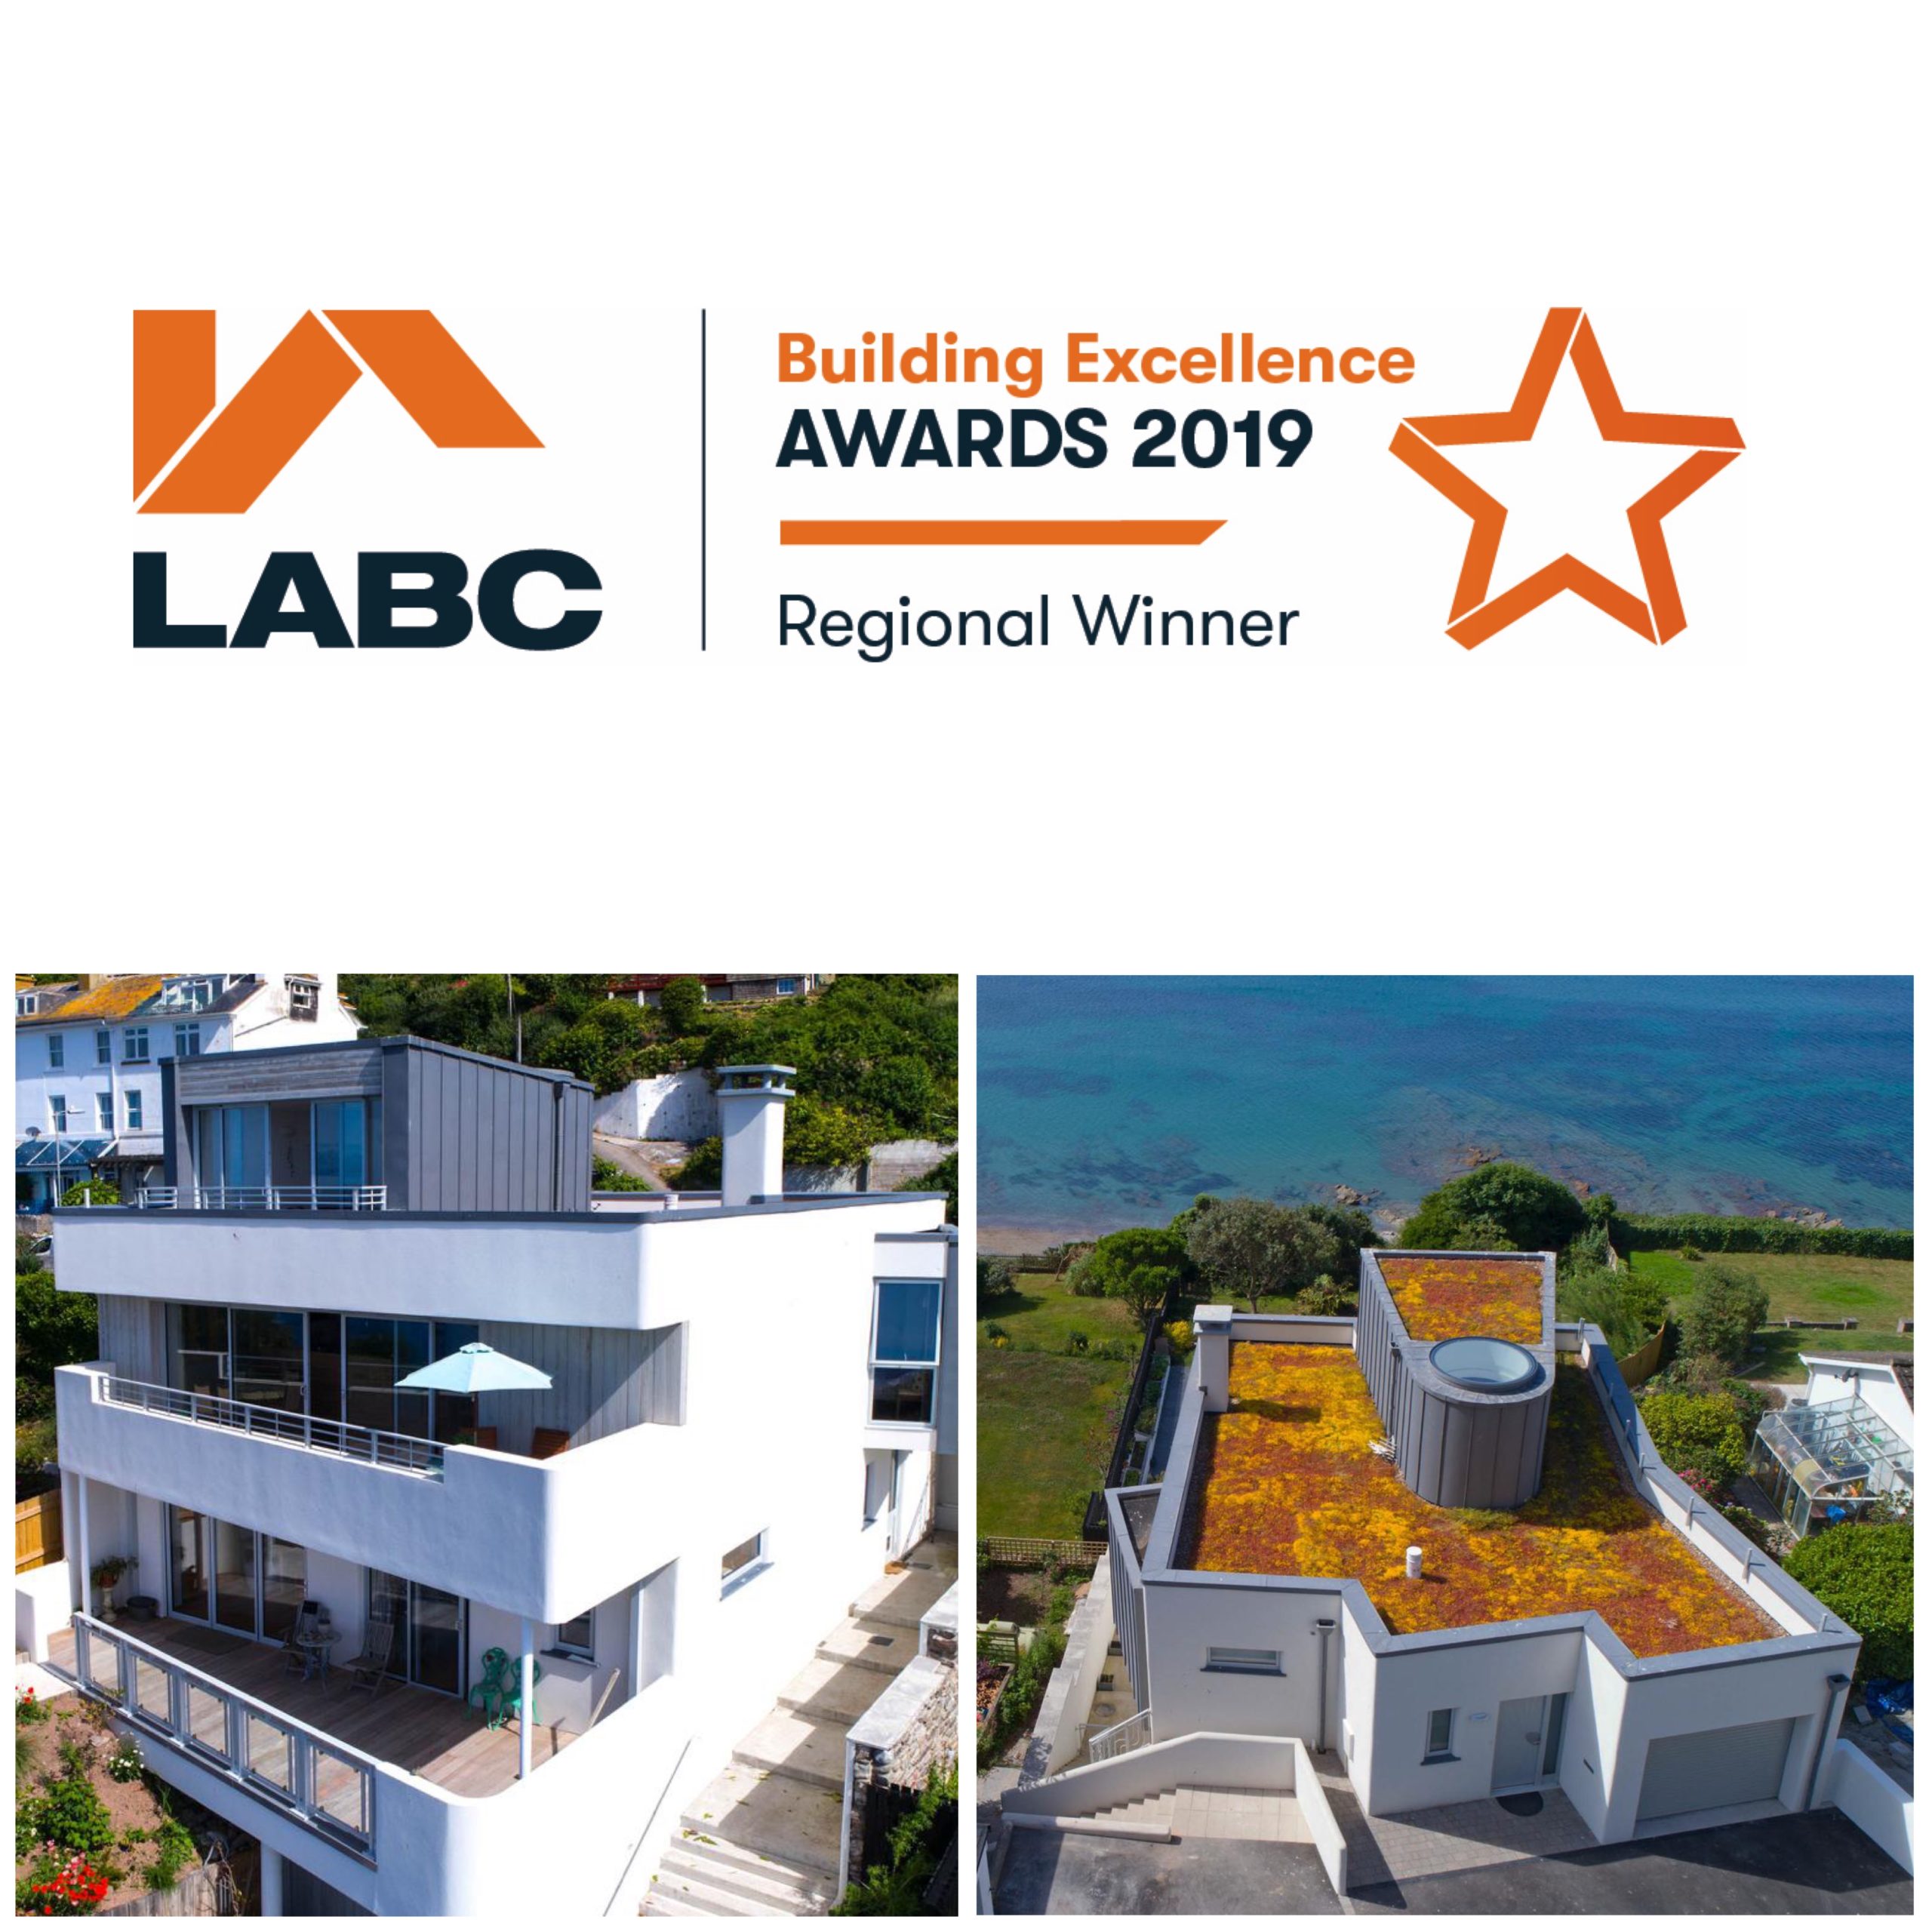 Building Excellence Awards 2019 regional finalist badge